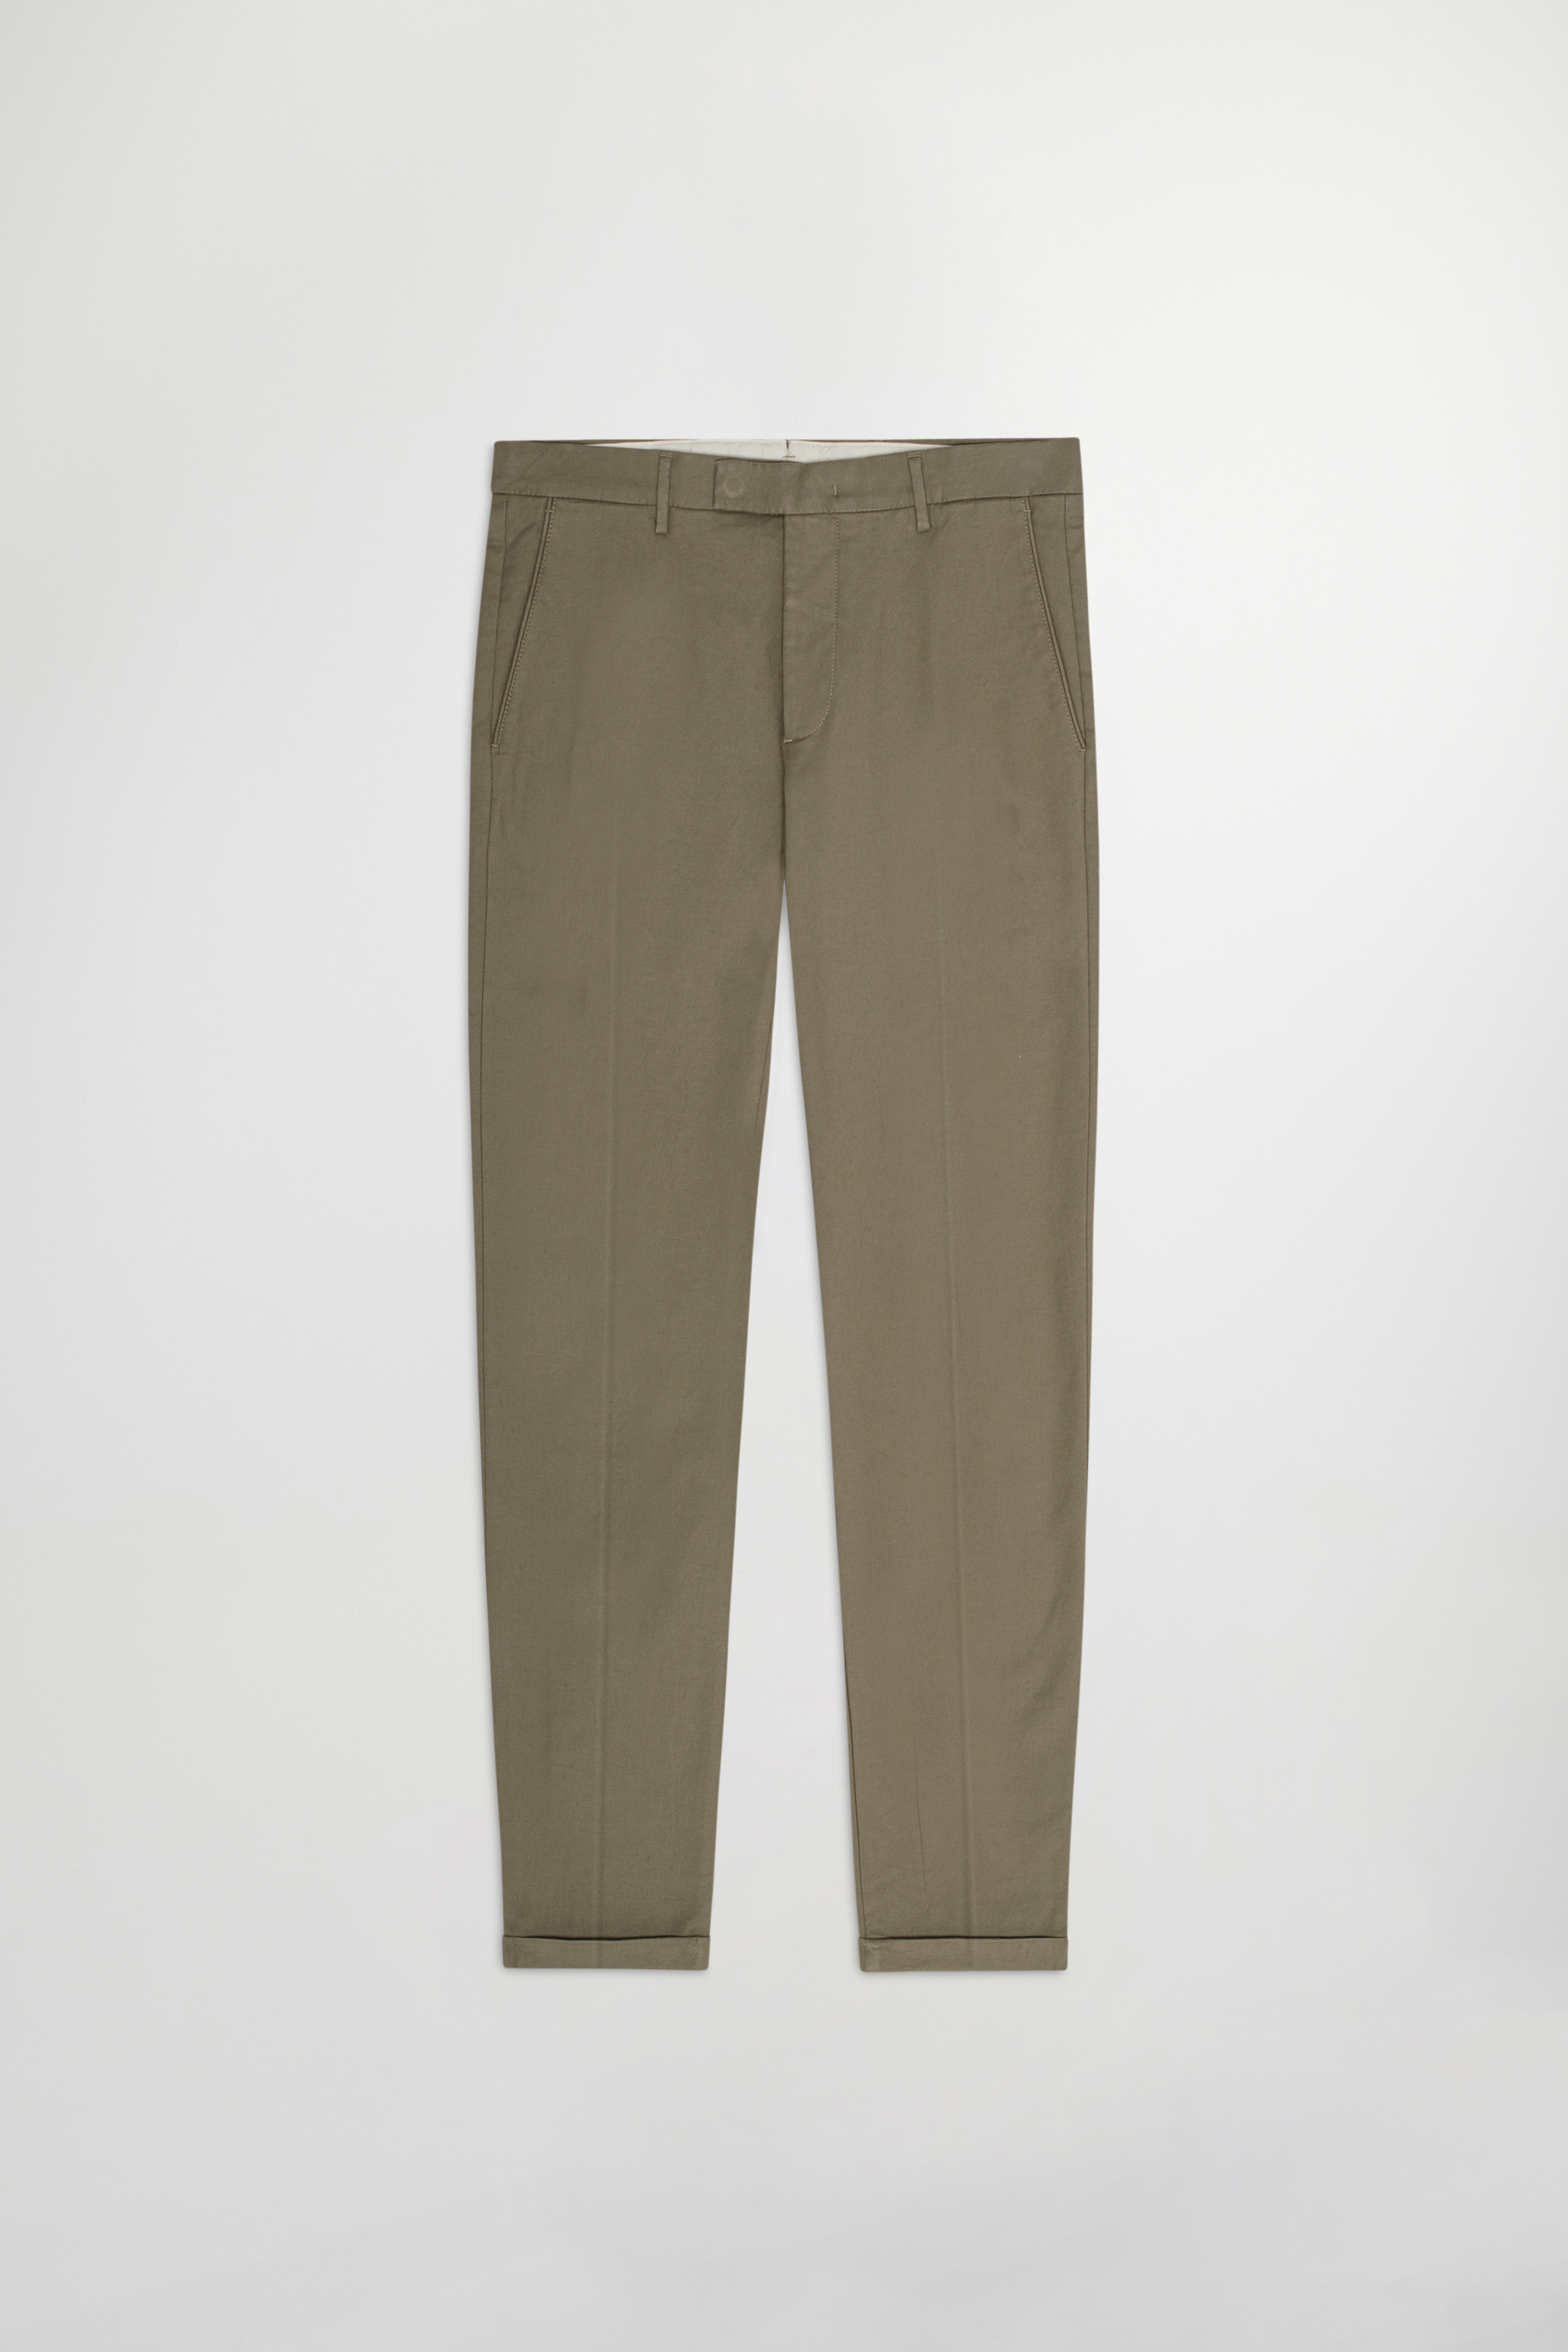 Travis Scott Whoisjacov Pocket Cargo Pants Multi-pocket trousers | eBay